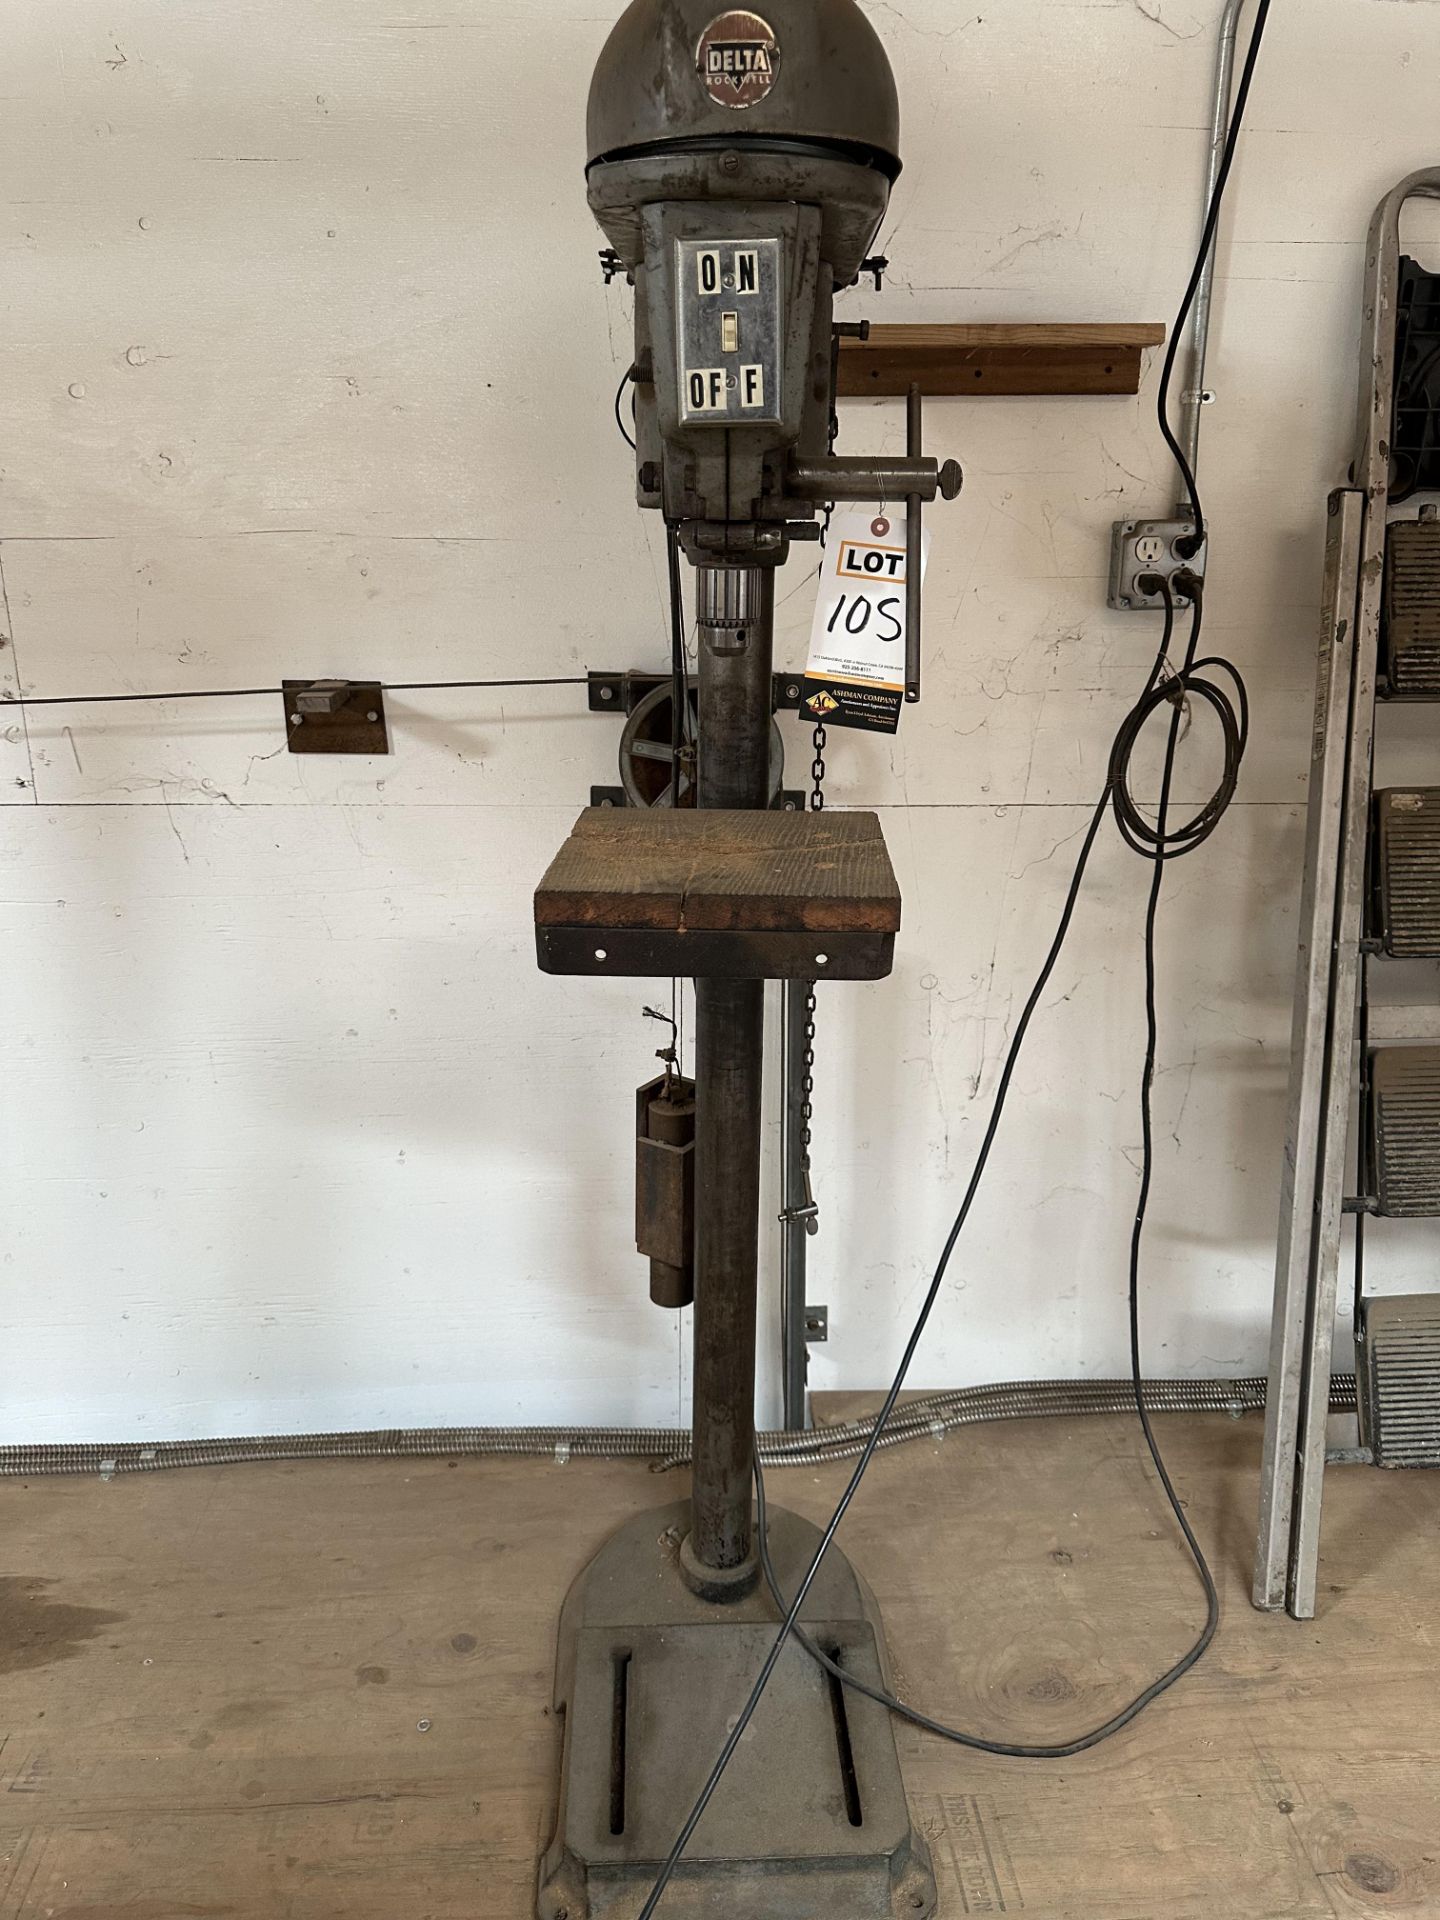 Delta Milwaukee drill press